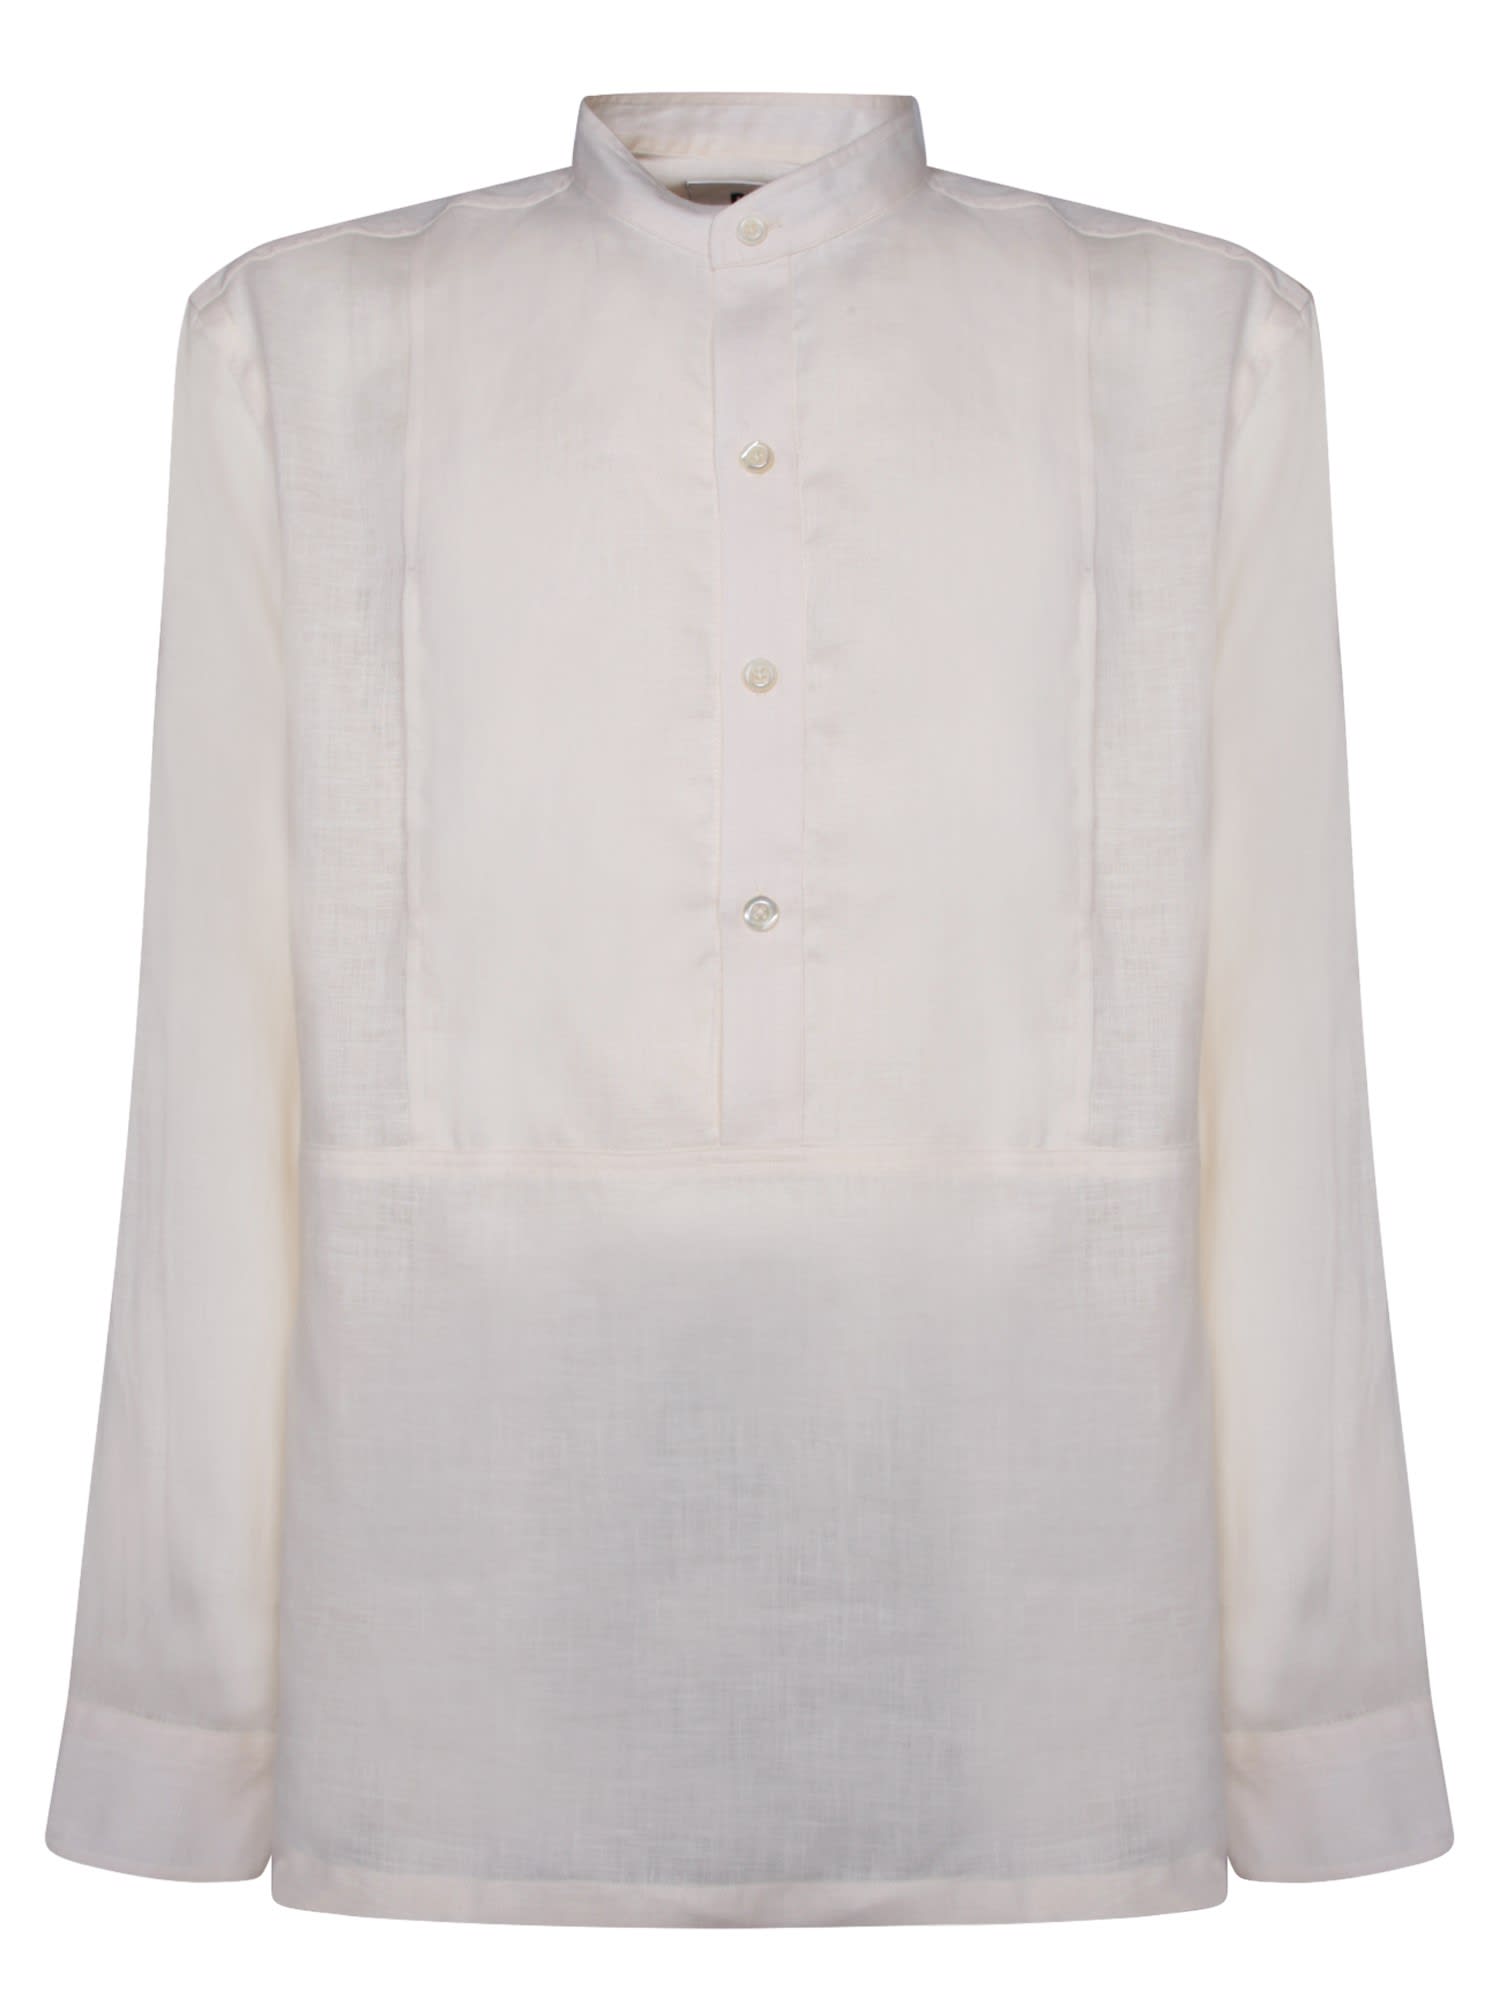 Shop Pt Torino Korean Neck White Shirt